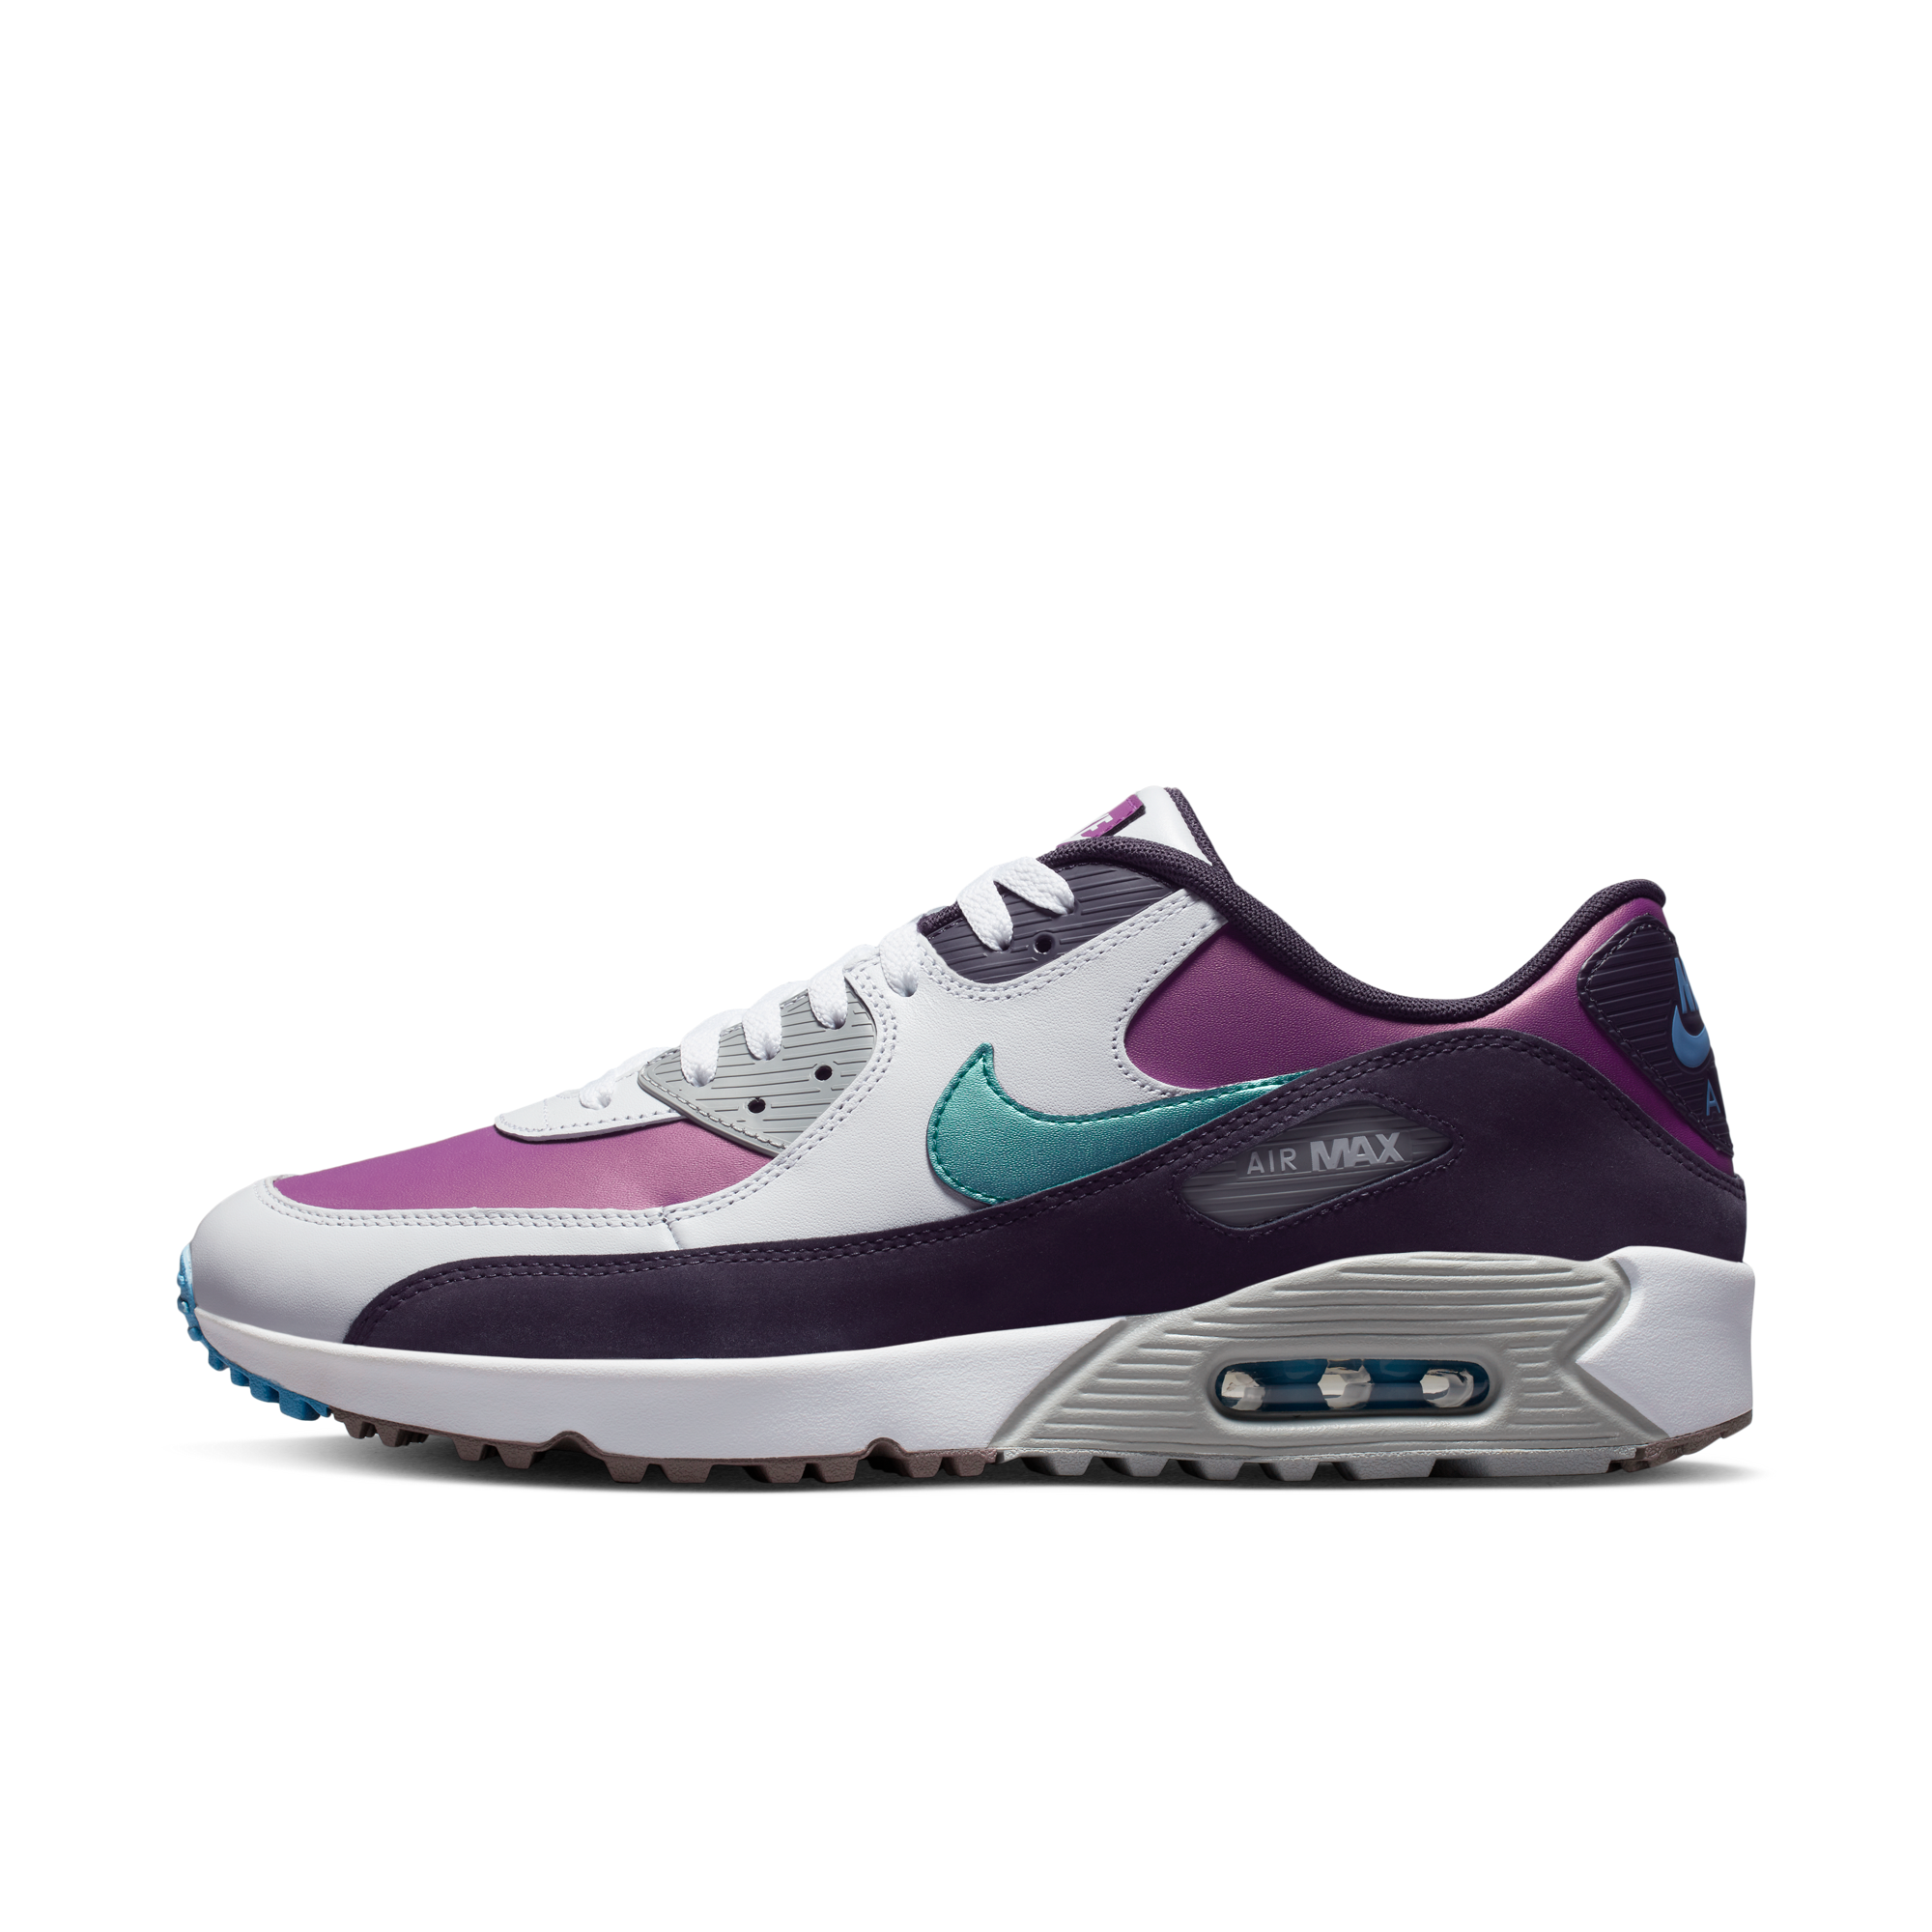 purple and grey air max 90